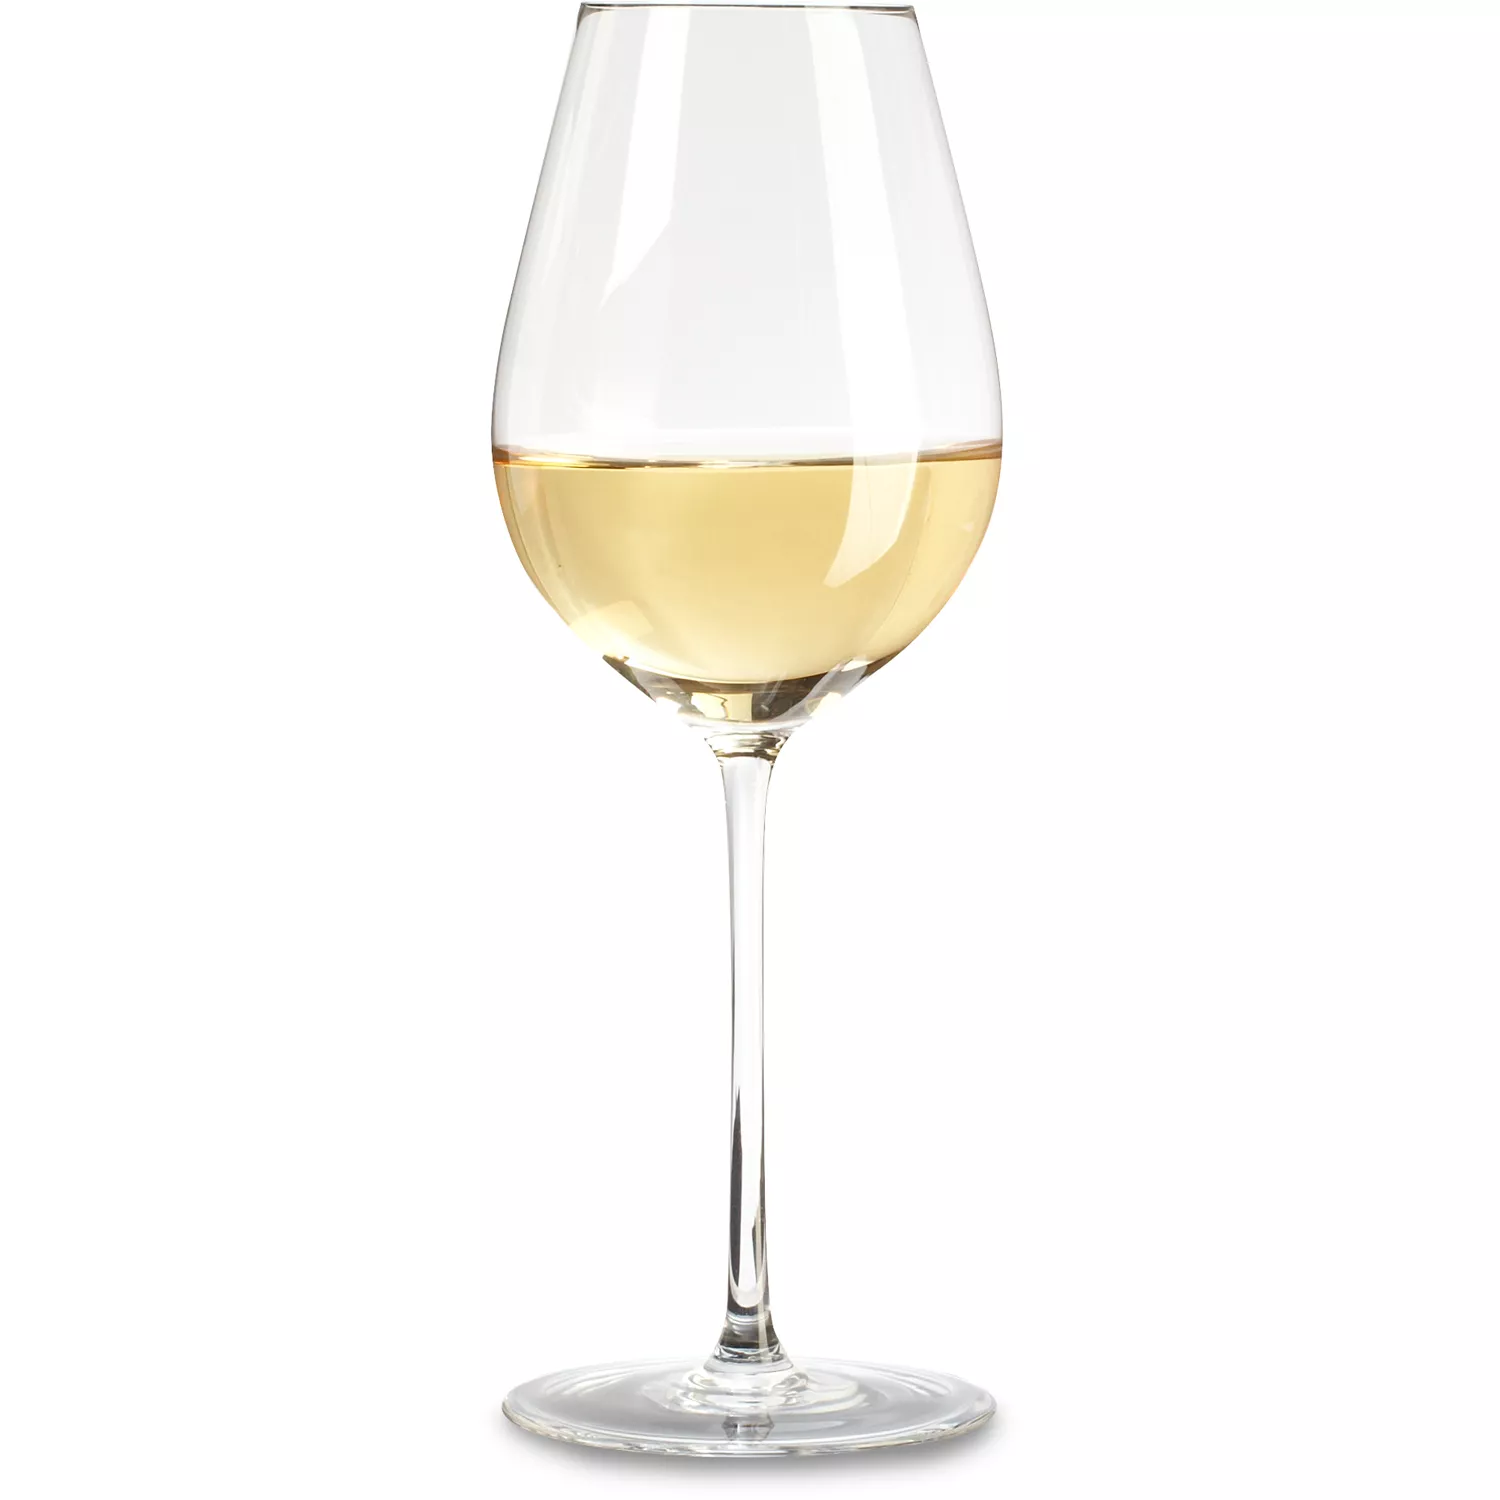 Zwiesel Handmade Enoteca Chardonnay Wine Glass